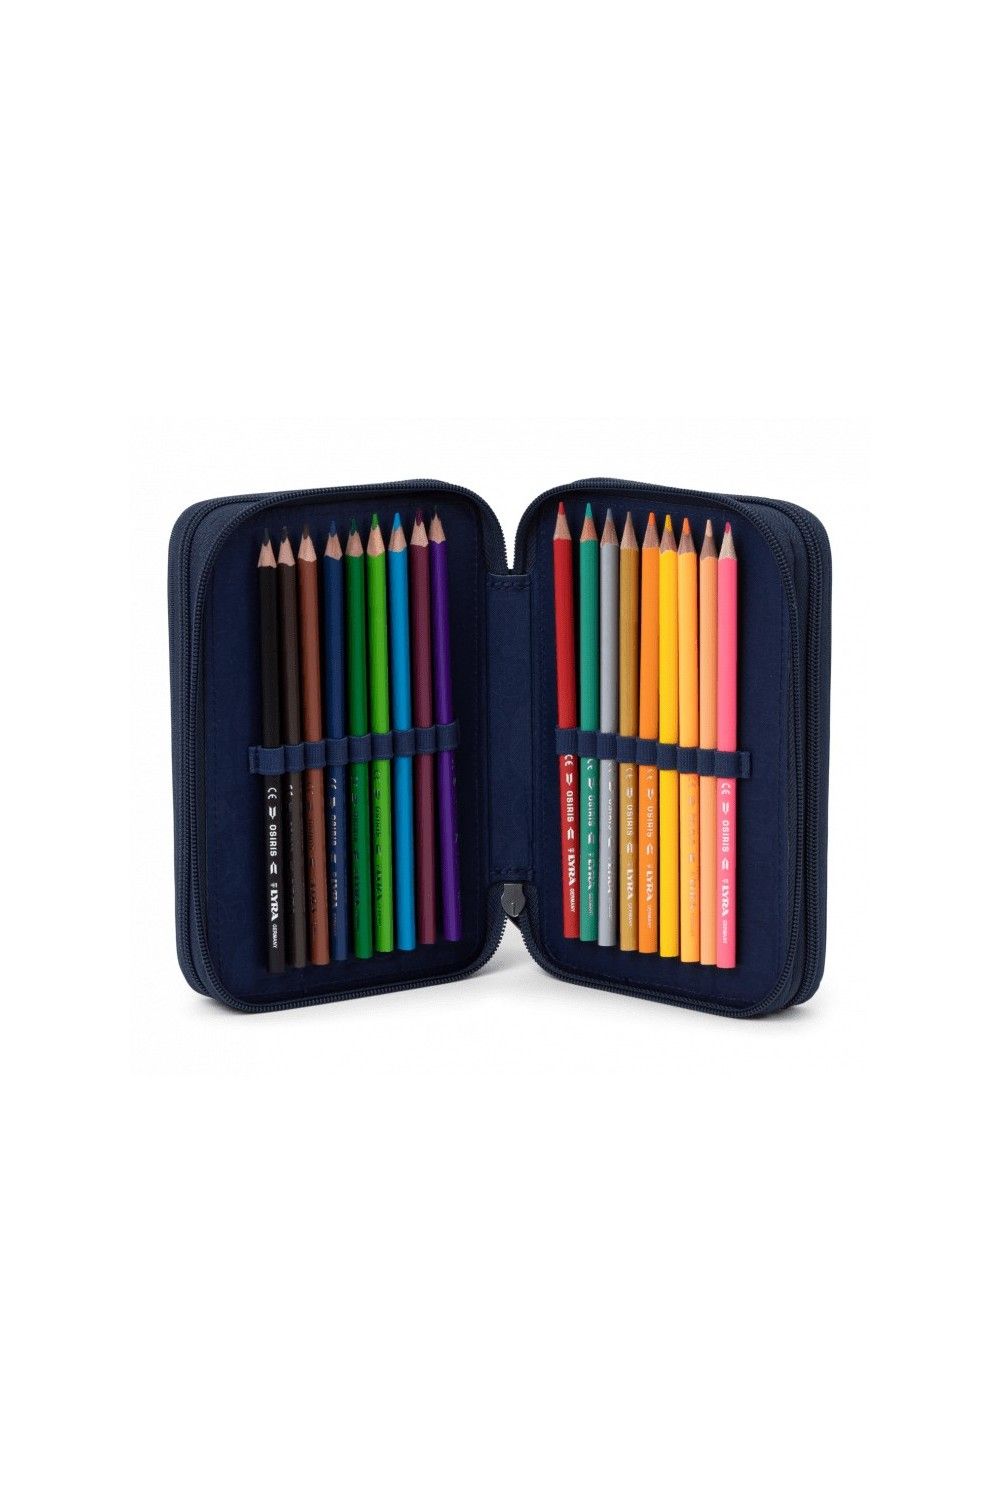 Ergobag maxi pencil case ReitBärhof